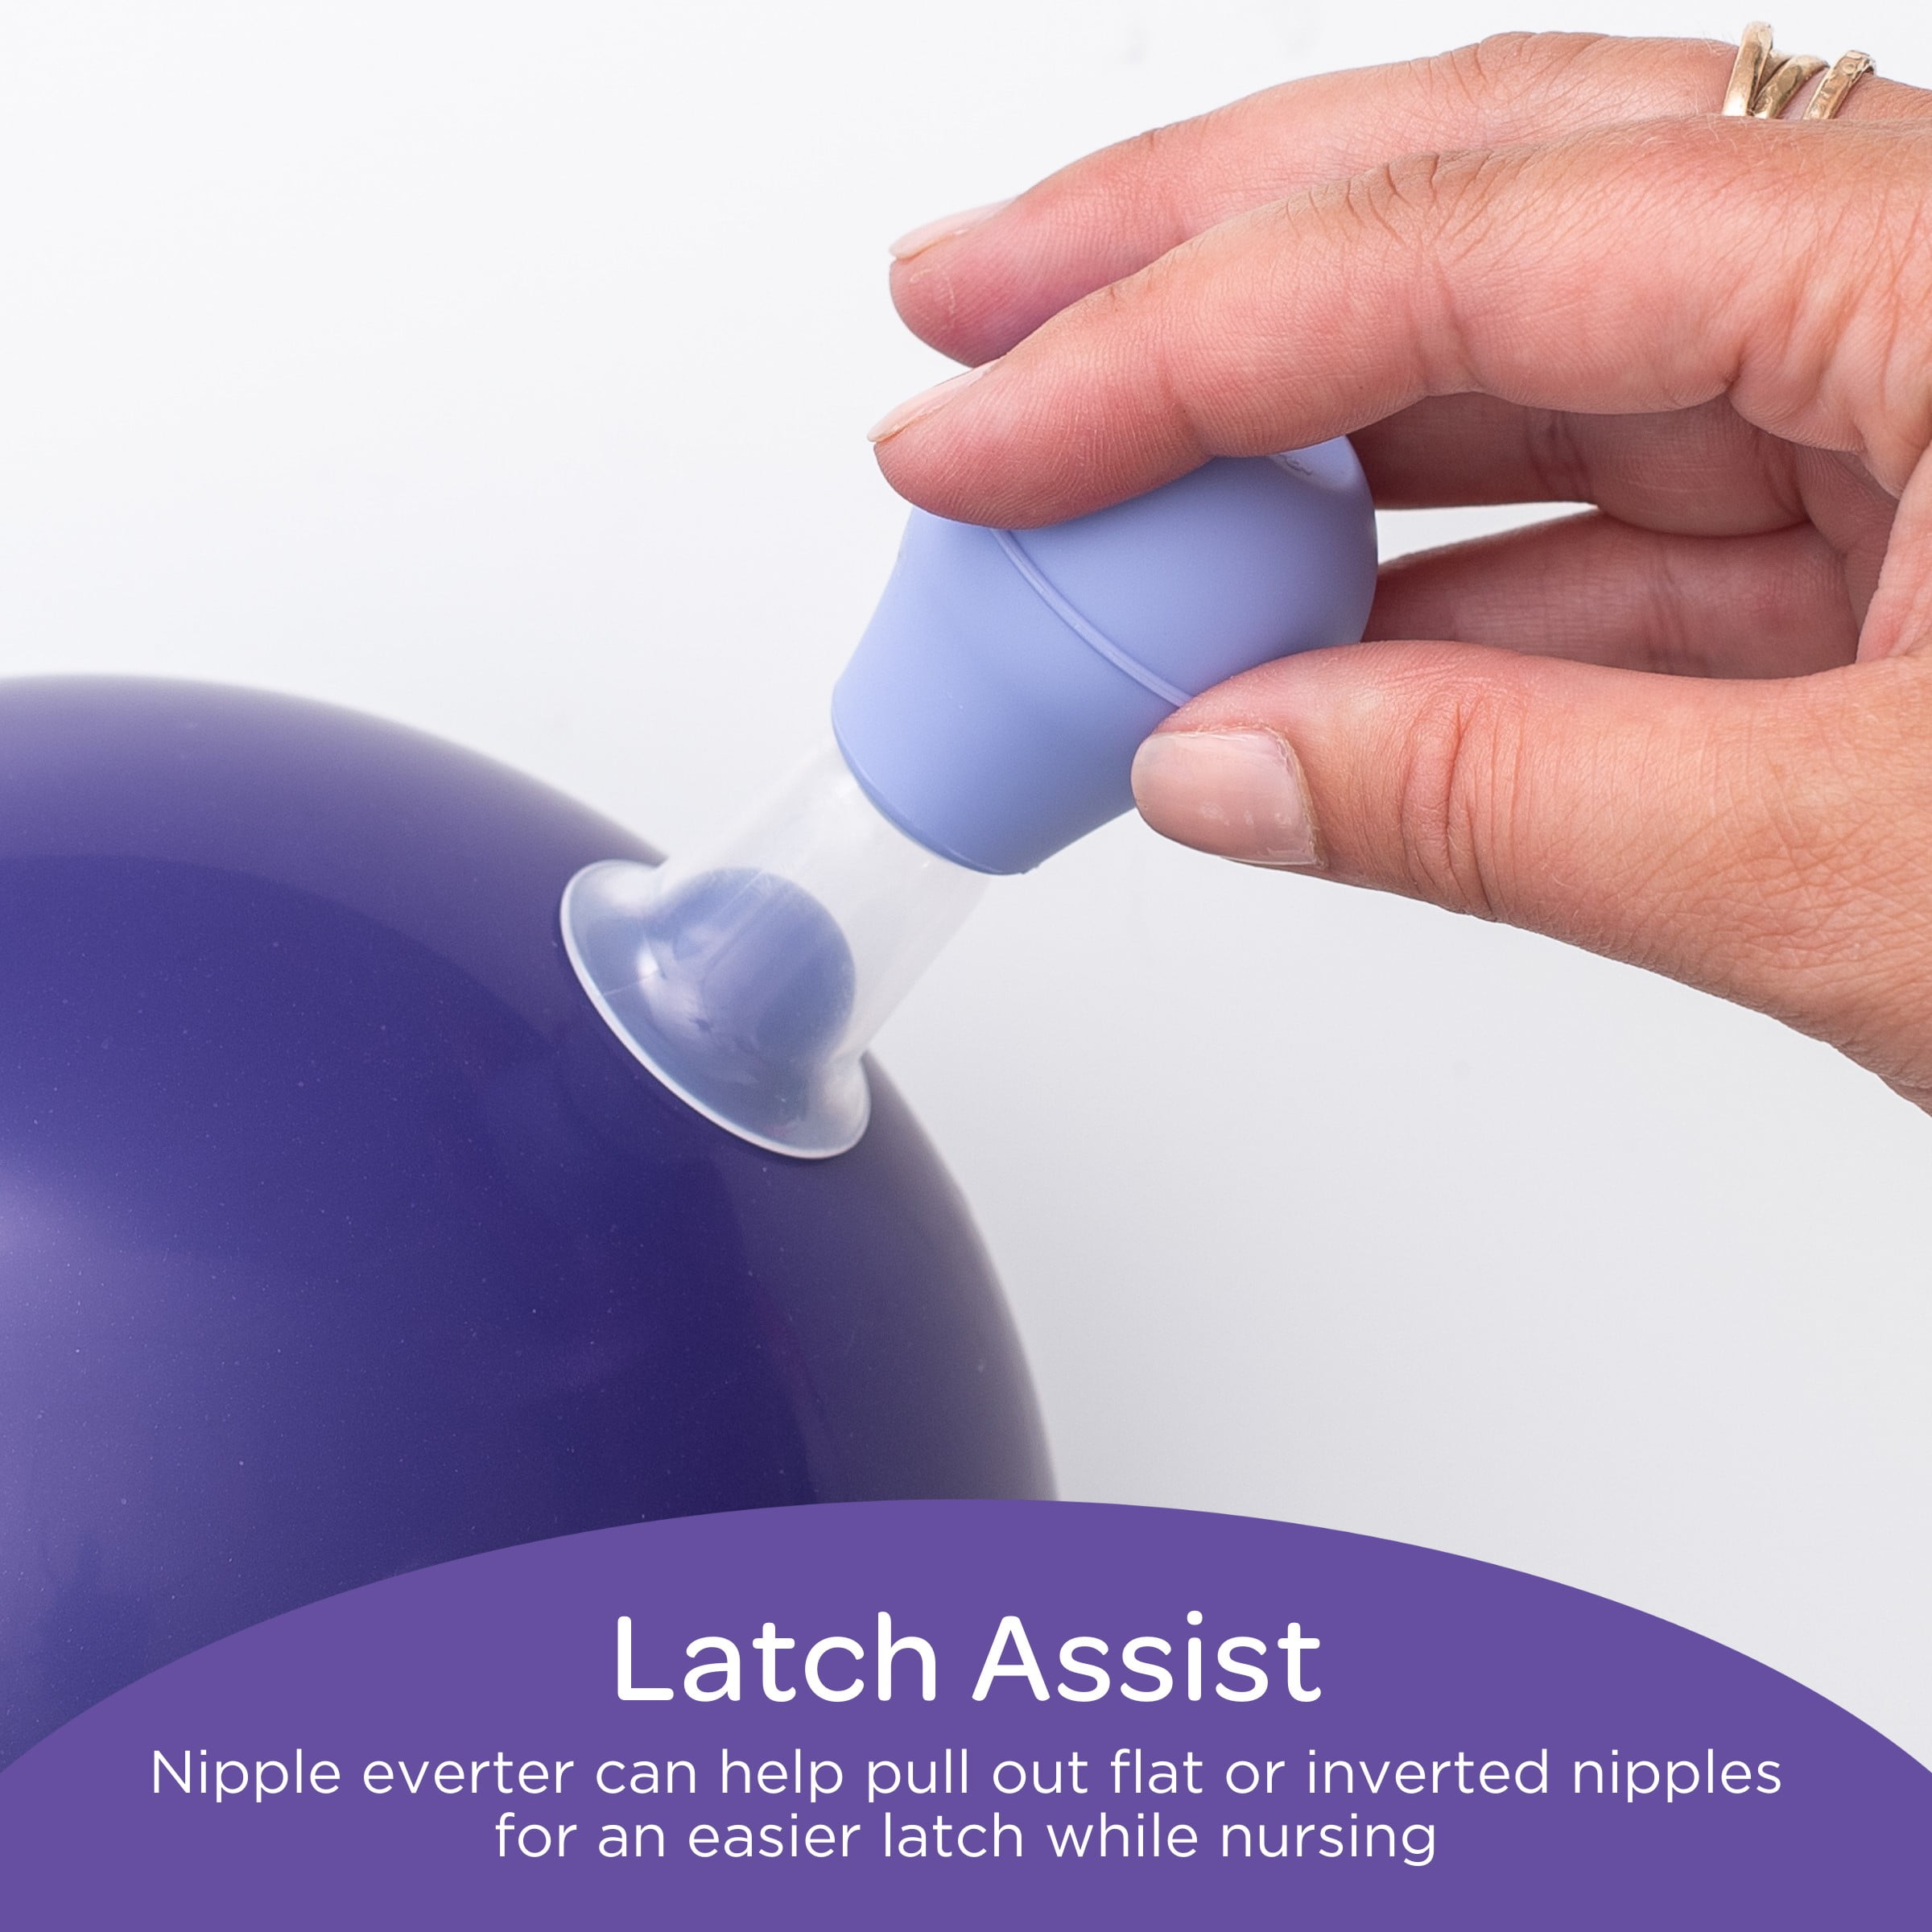 Lansinoh LatchAssist Nipple Everter - 2 Flange Sizes - NIB FAST SHIPPING  USA